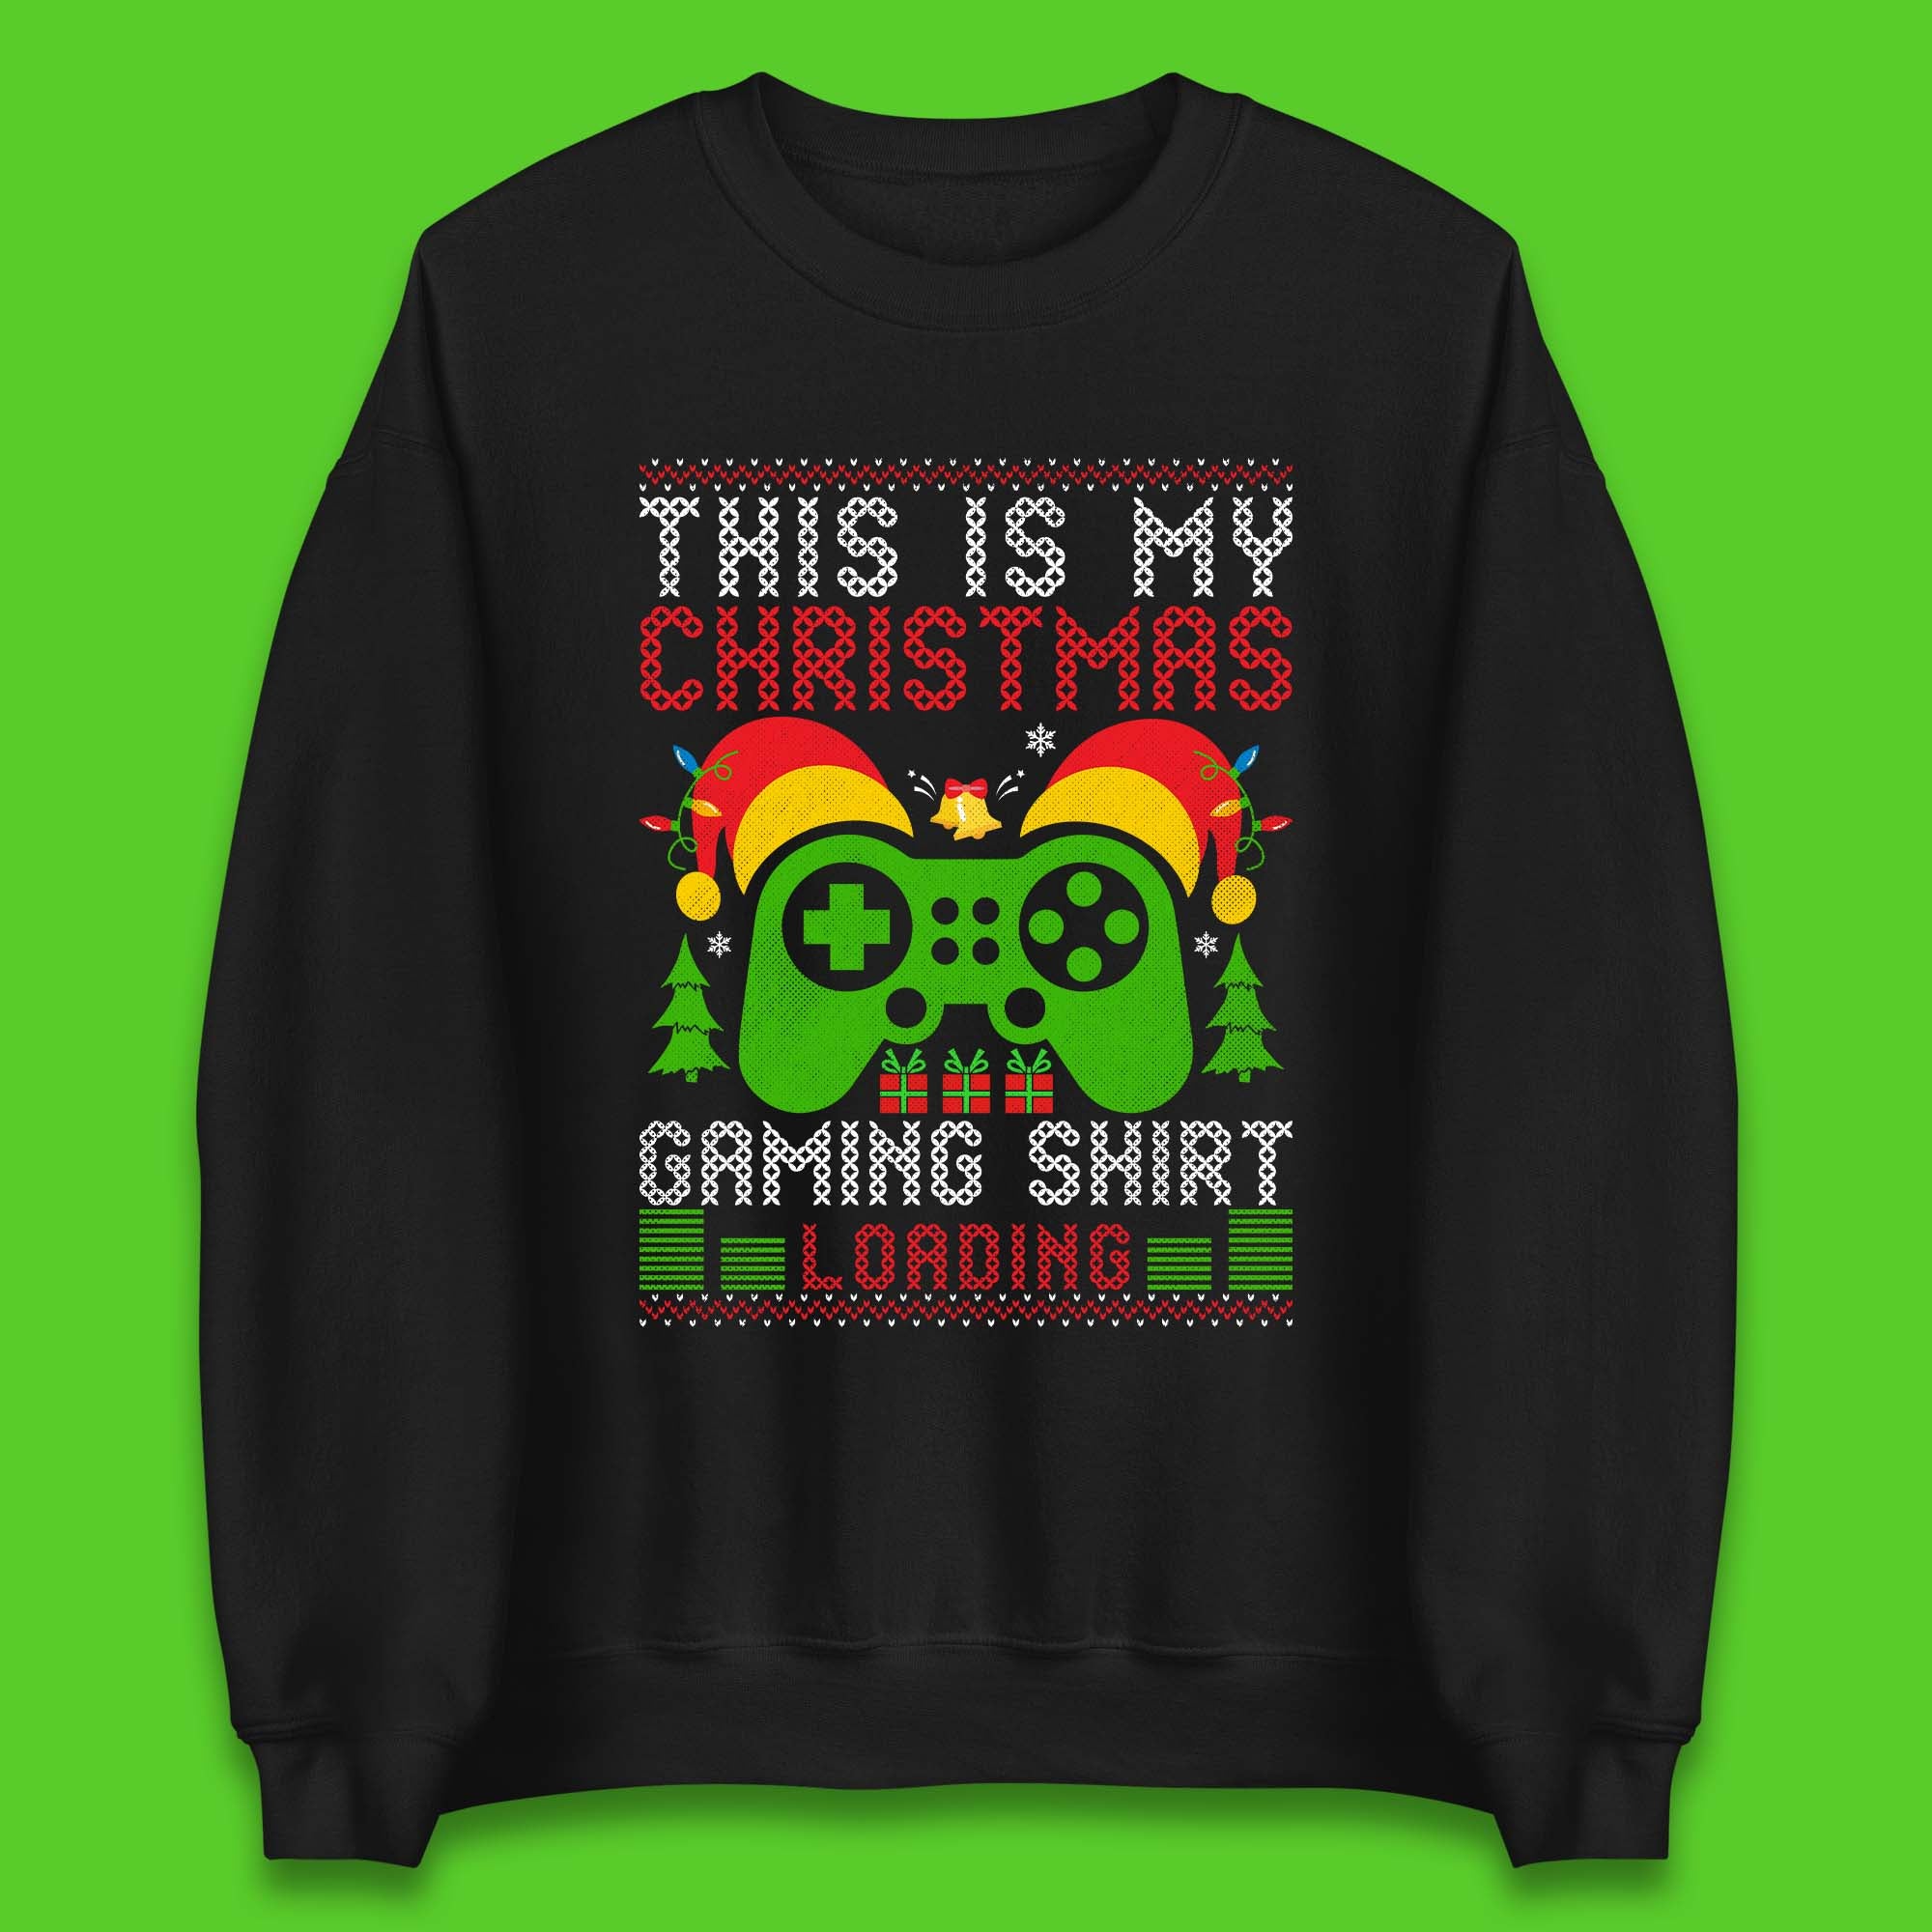 Loading Gamer Christmas Unisex Sweatshirt